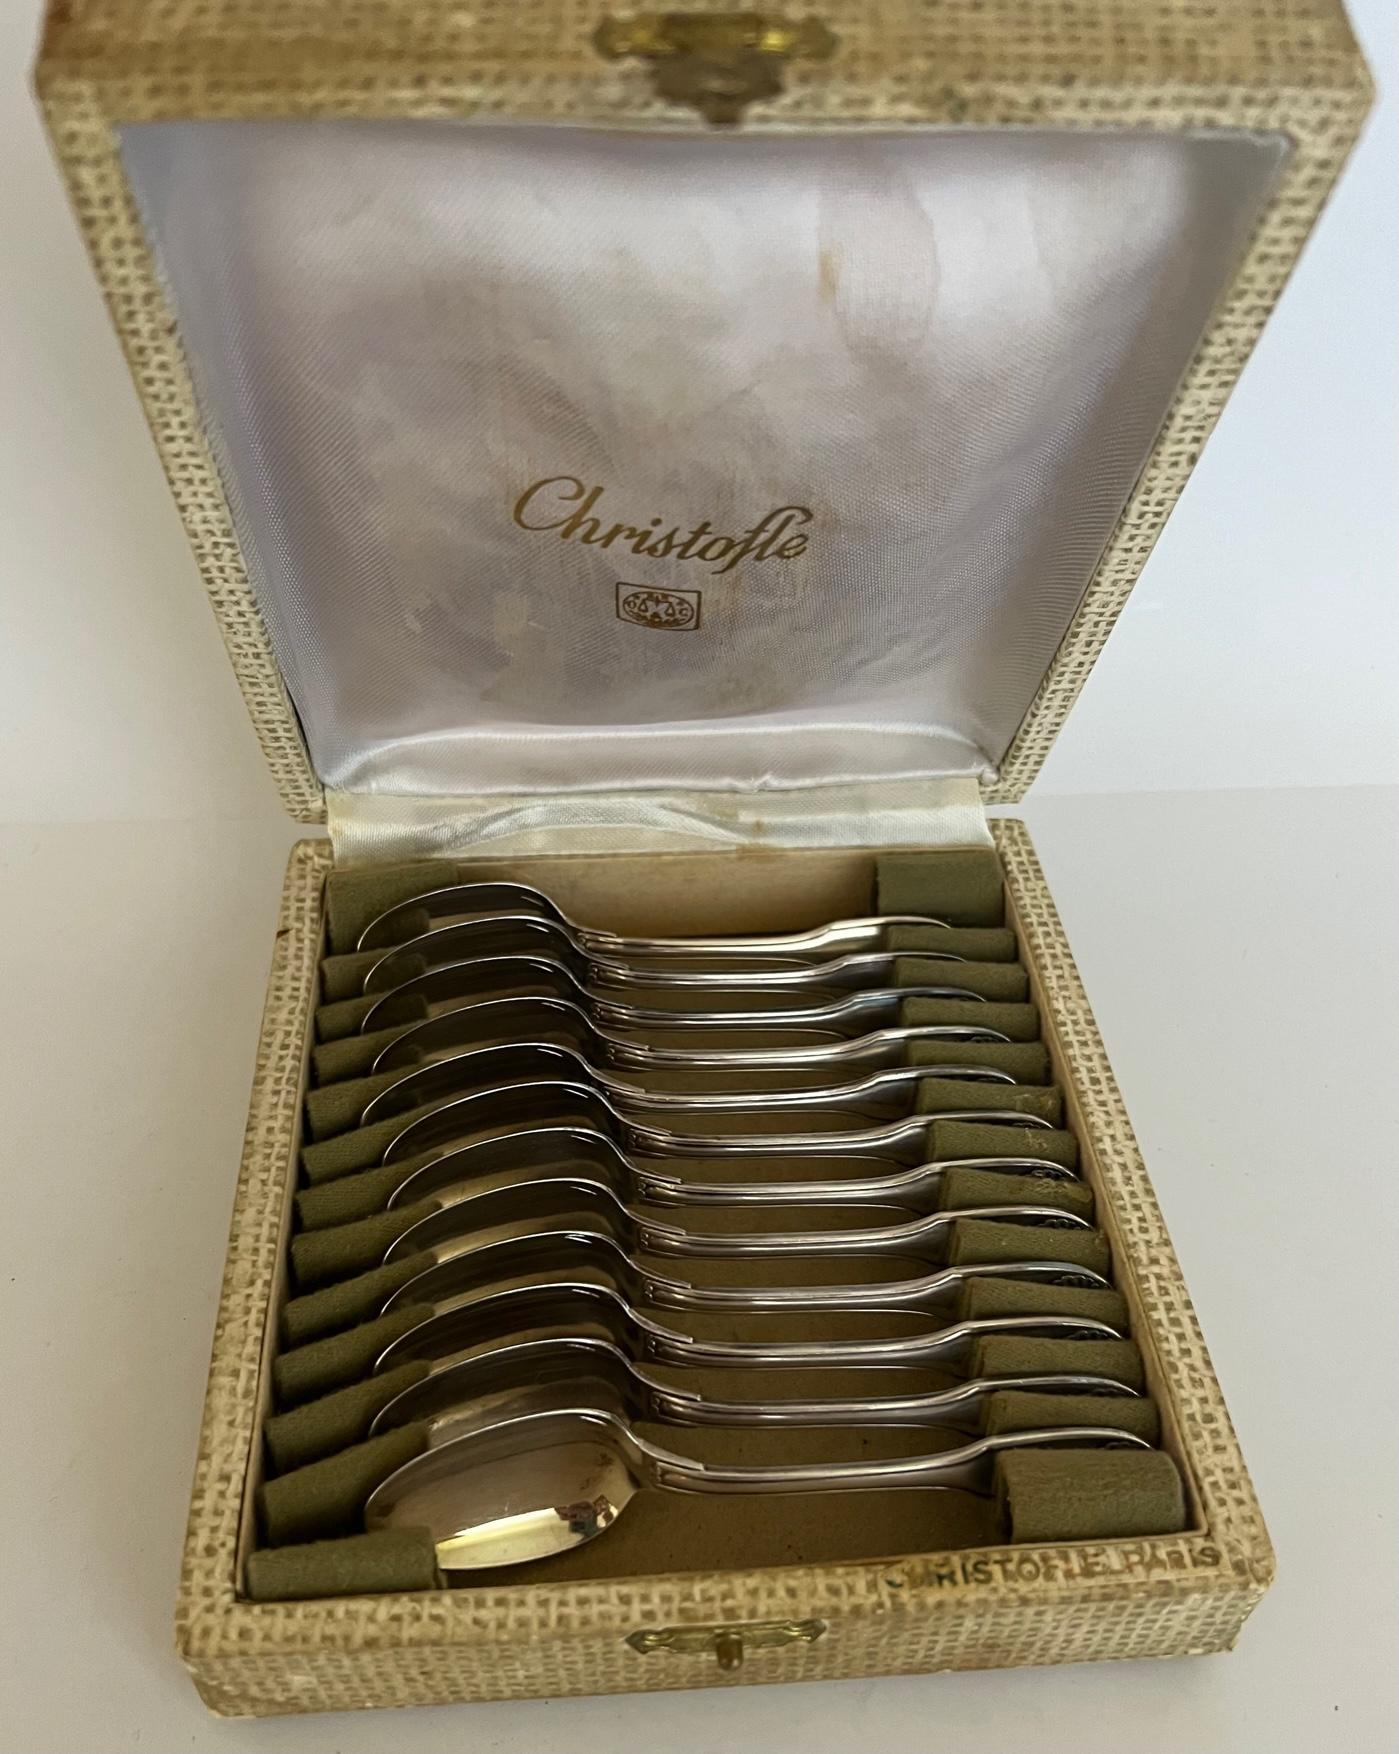 Christofle Demitasse-Löffel mit Vendome-Muster in Karton, 12er-Set (Versilberung) im Angebot